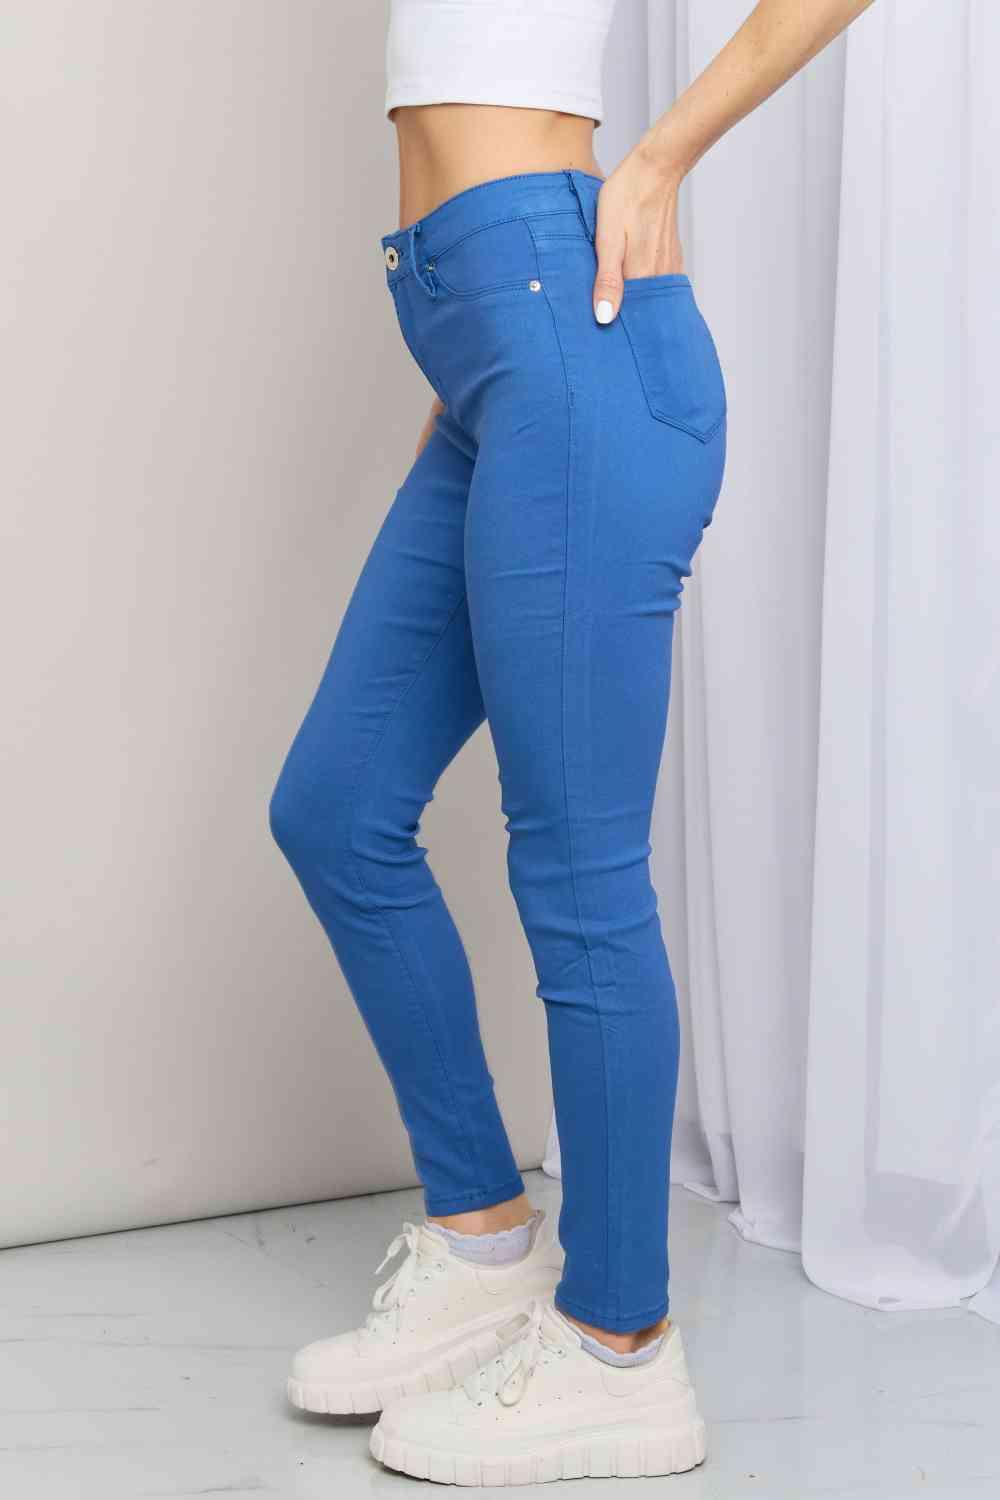 YMI Jeanswear Kate Hyper-Stretch Full Size Mid-Rise Skinny Jeans in Electric Blue - Immenzive